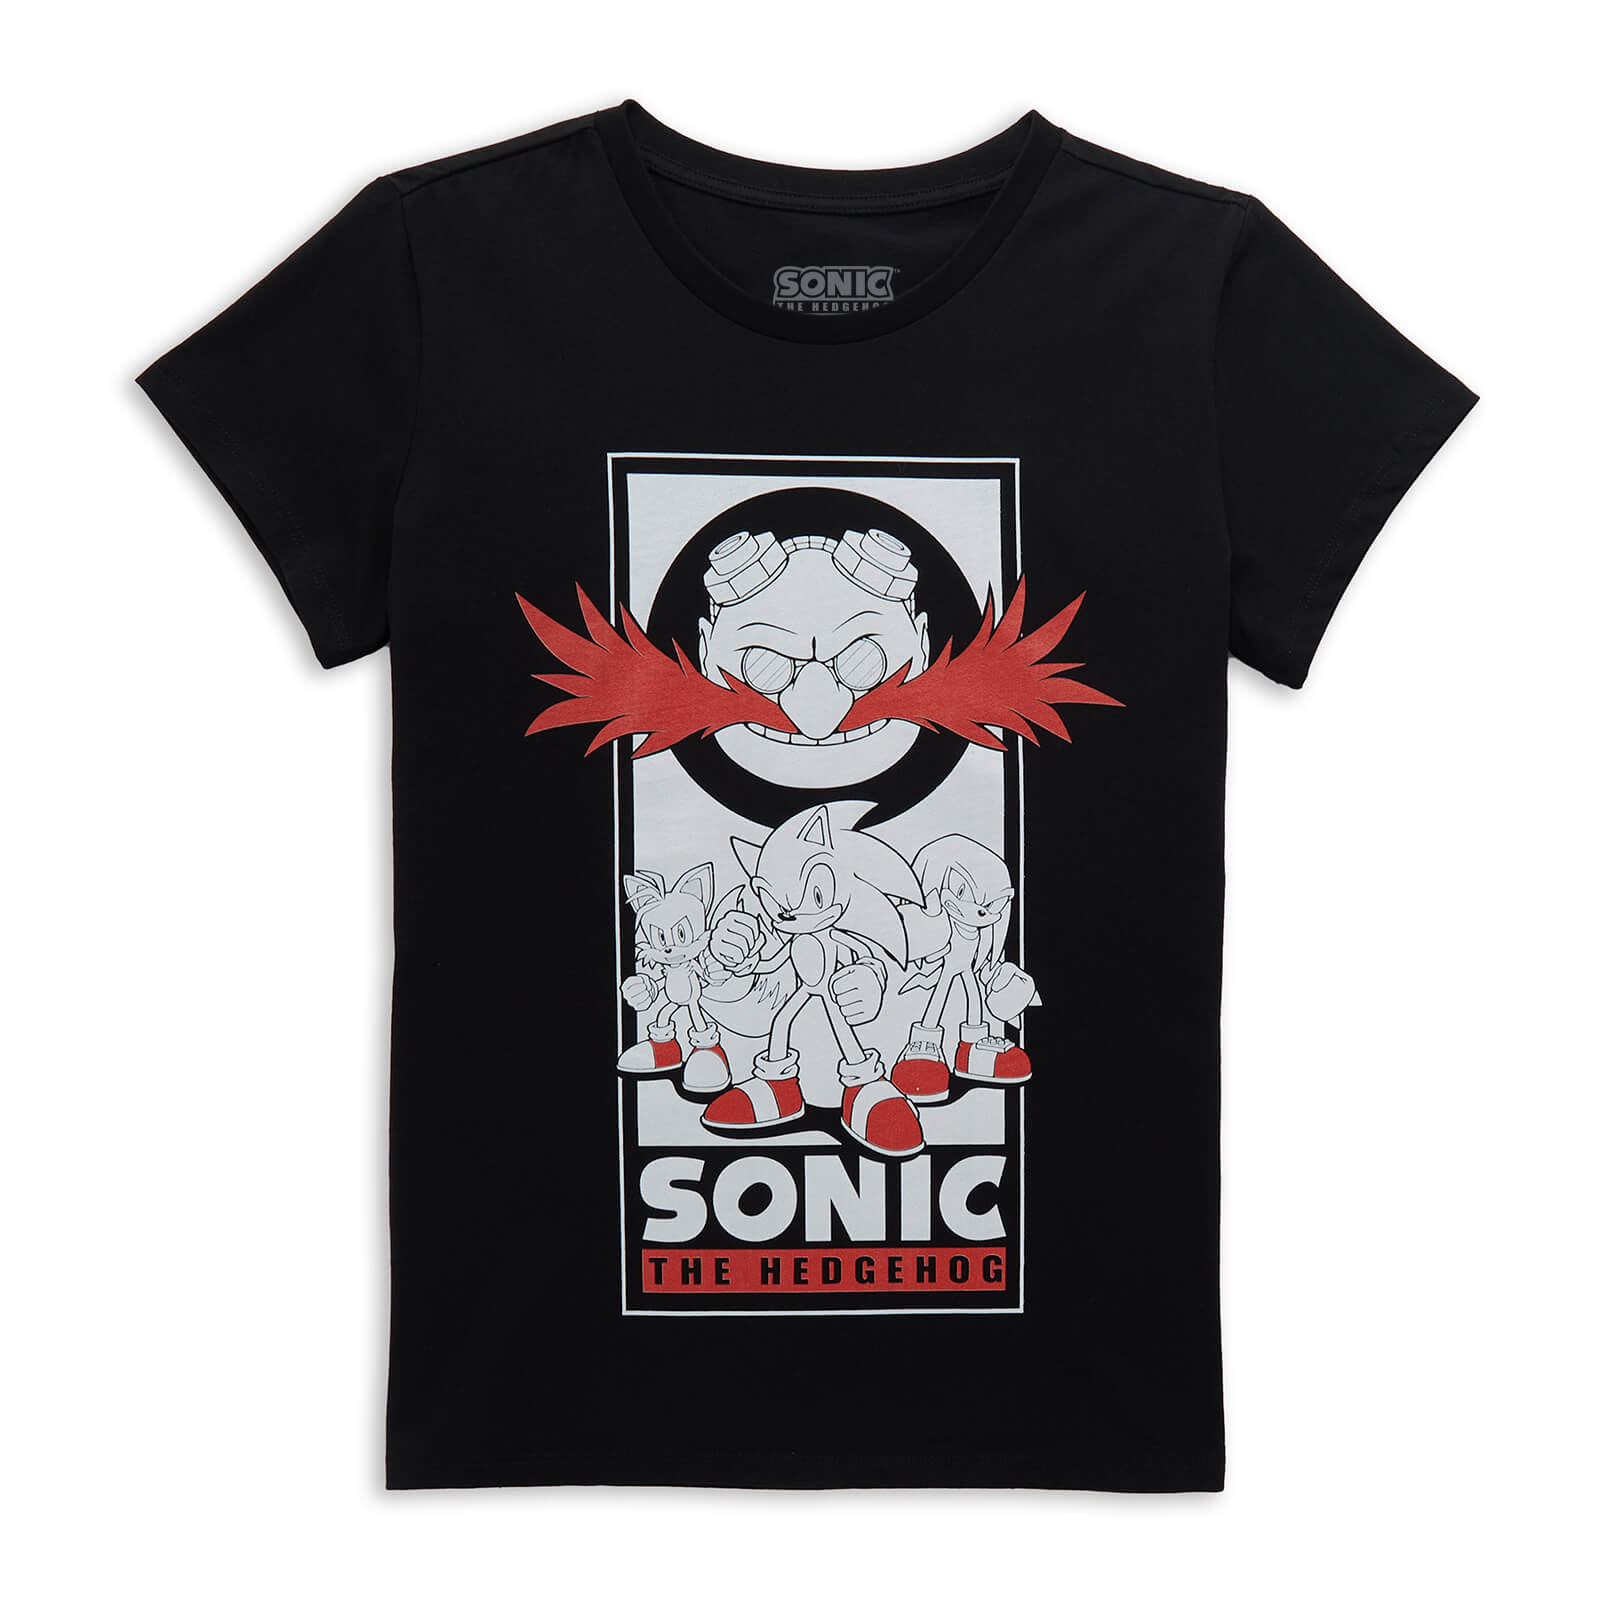 Sonic The Hedgehog Team Up Women's T-Shirt - Black - XS